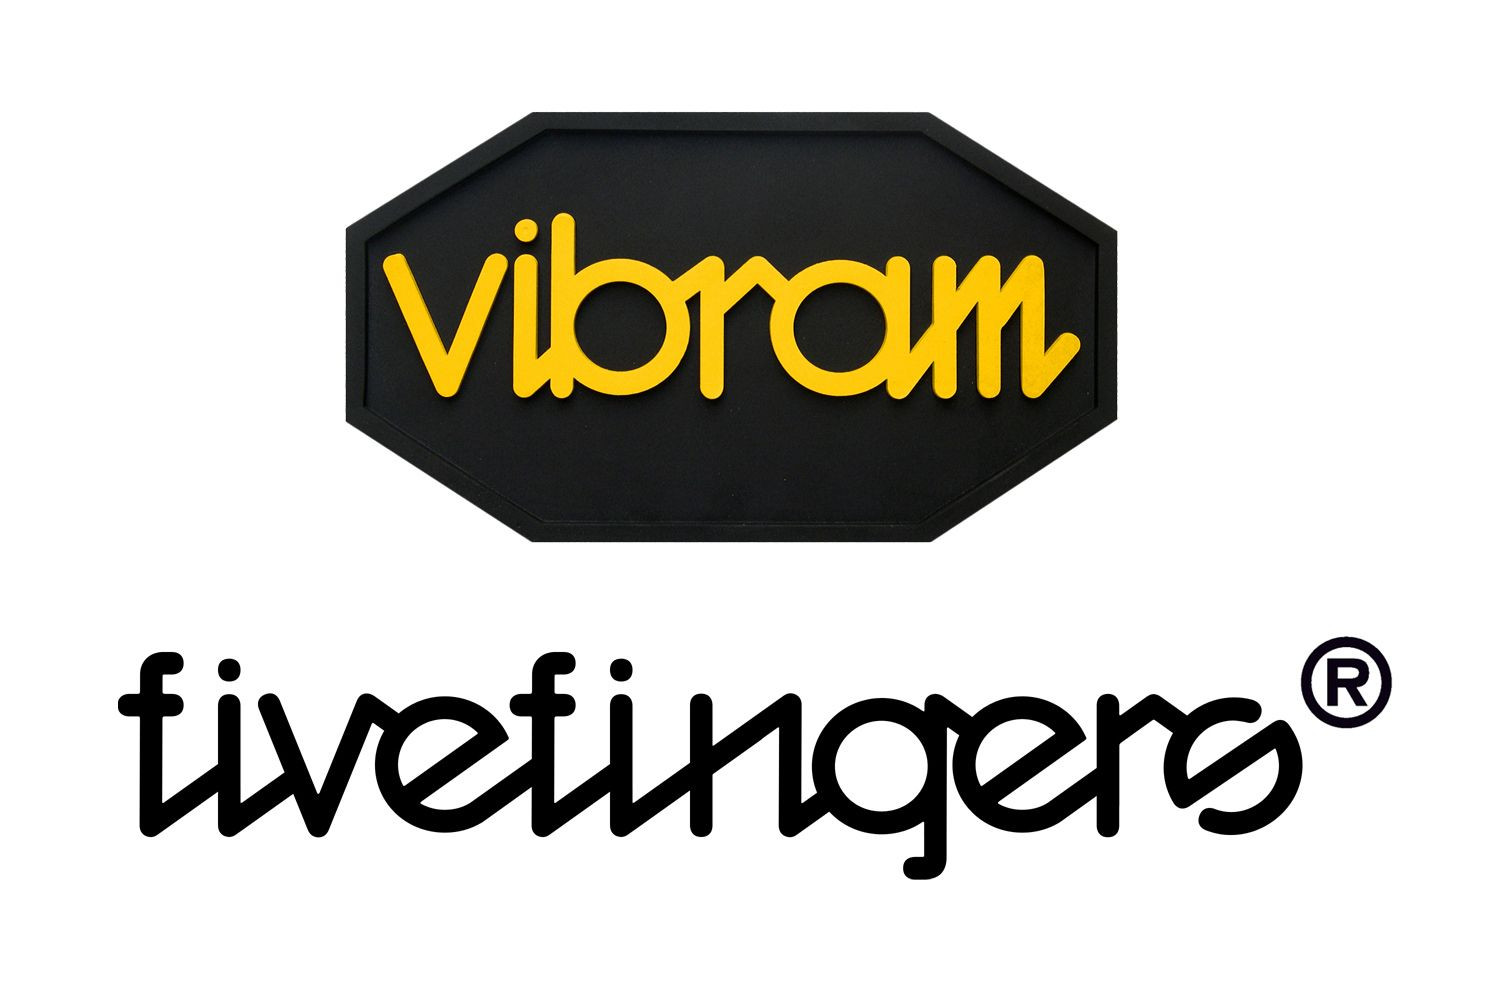 Vibram FiveFingers